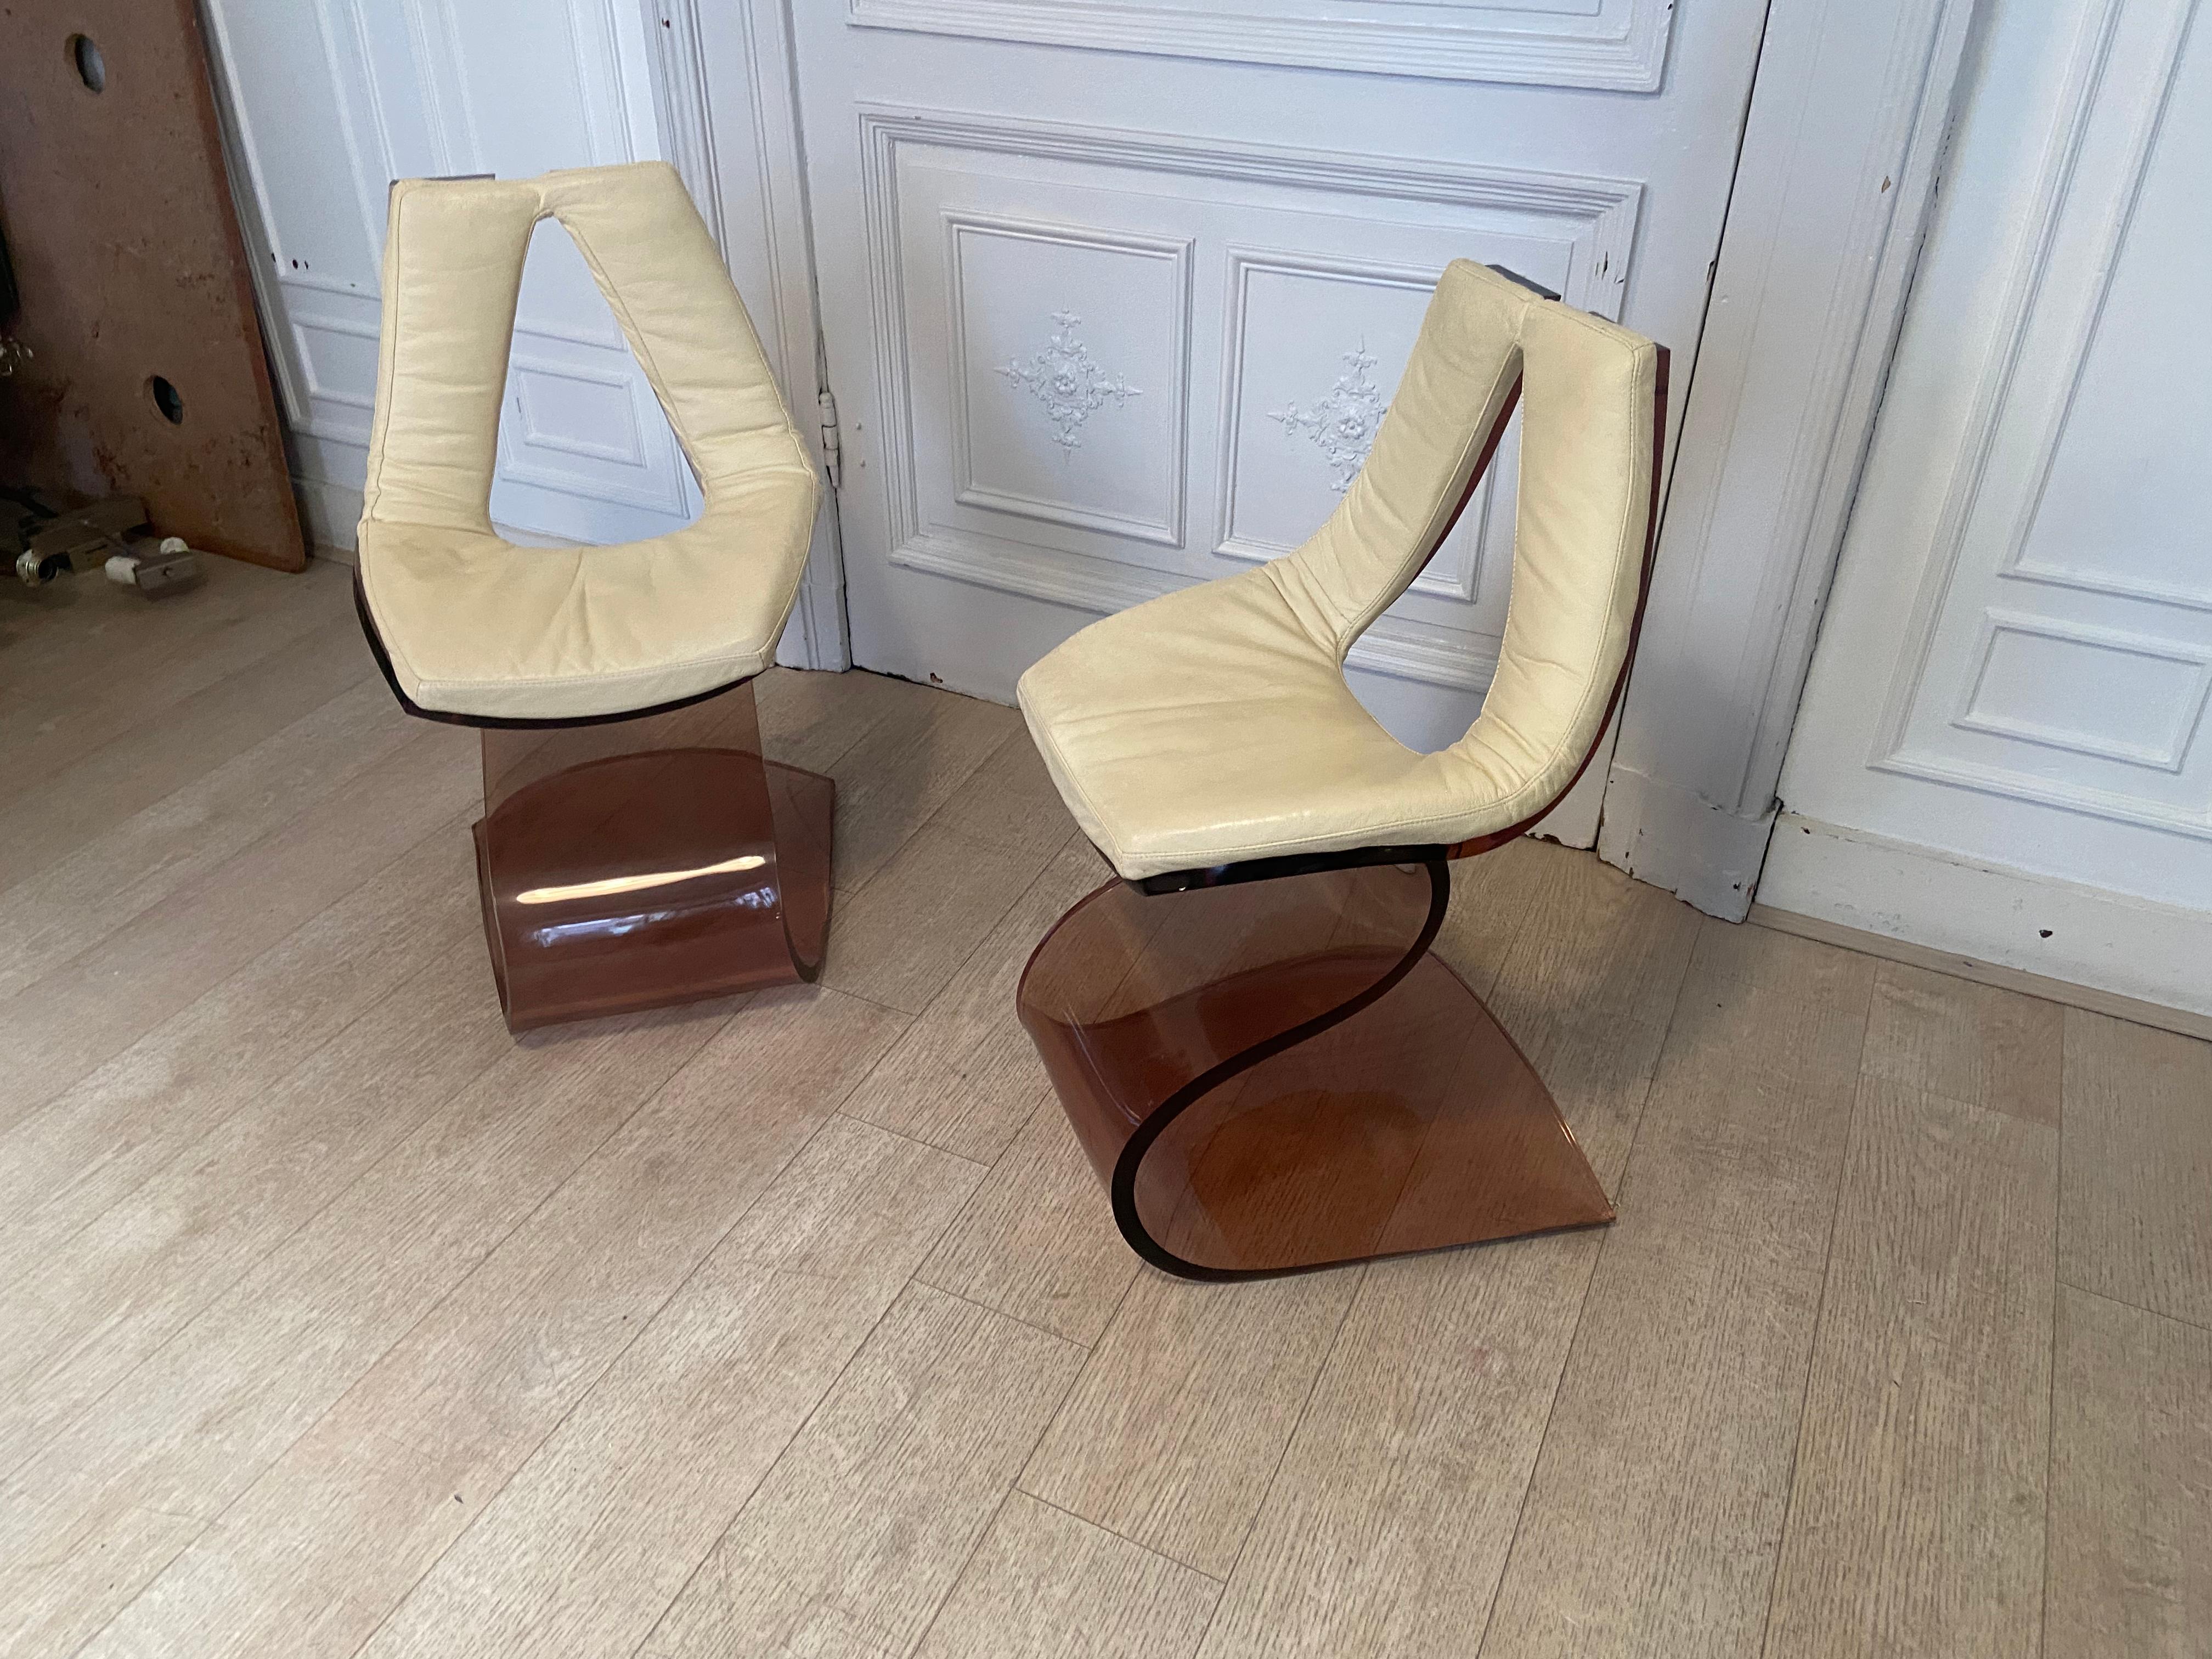 Michel Dumas Chairs, Plexiglass, 1970s For Sale 4